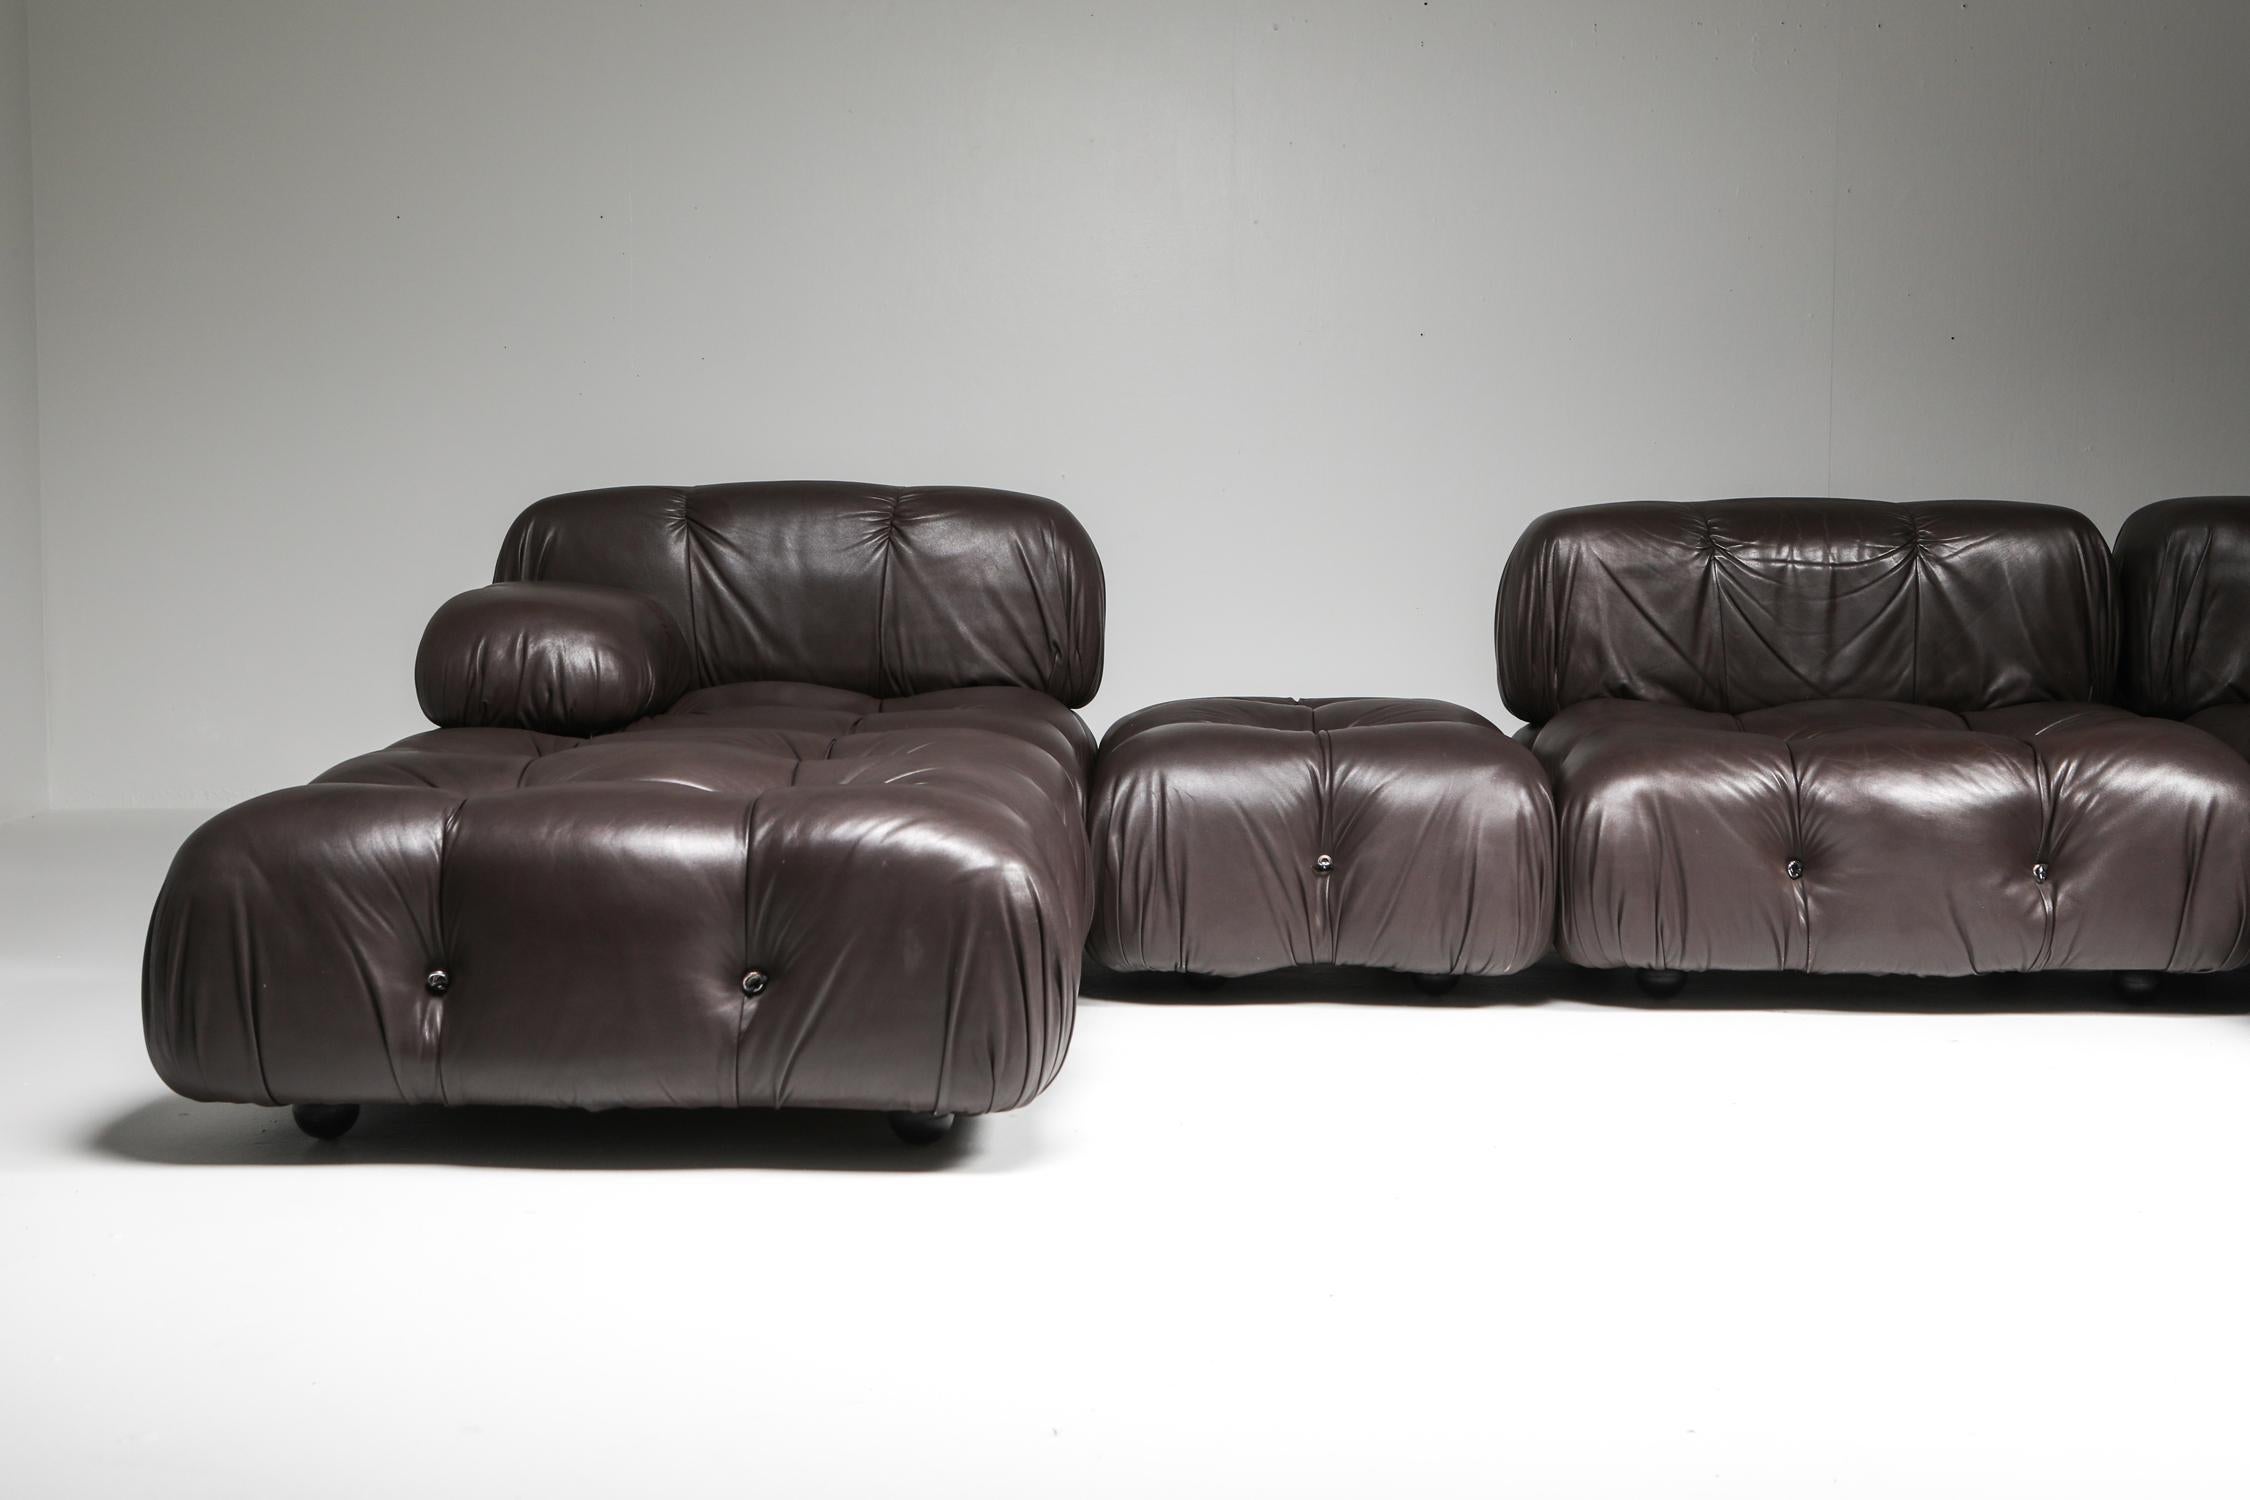 Mario Bellini's Camaleonda Original Sectional Sofa in Chocolate Brown Leather 1